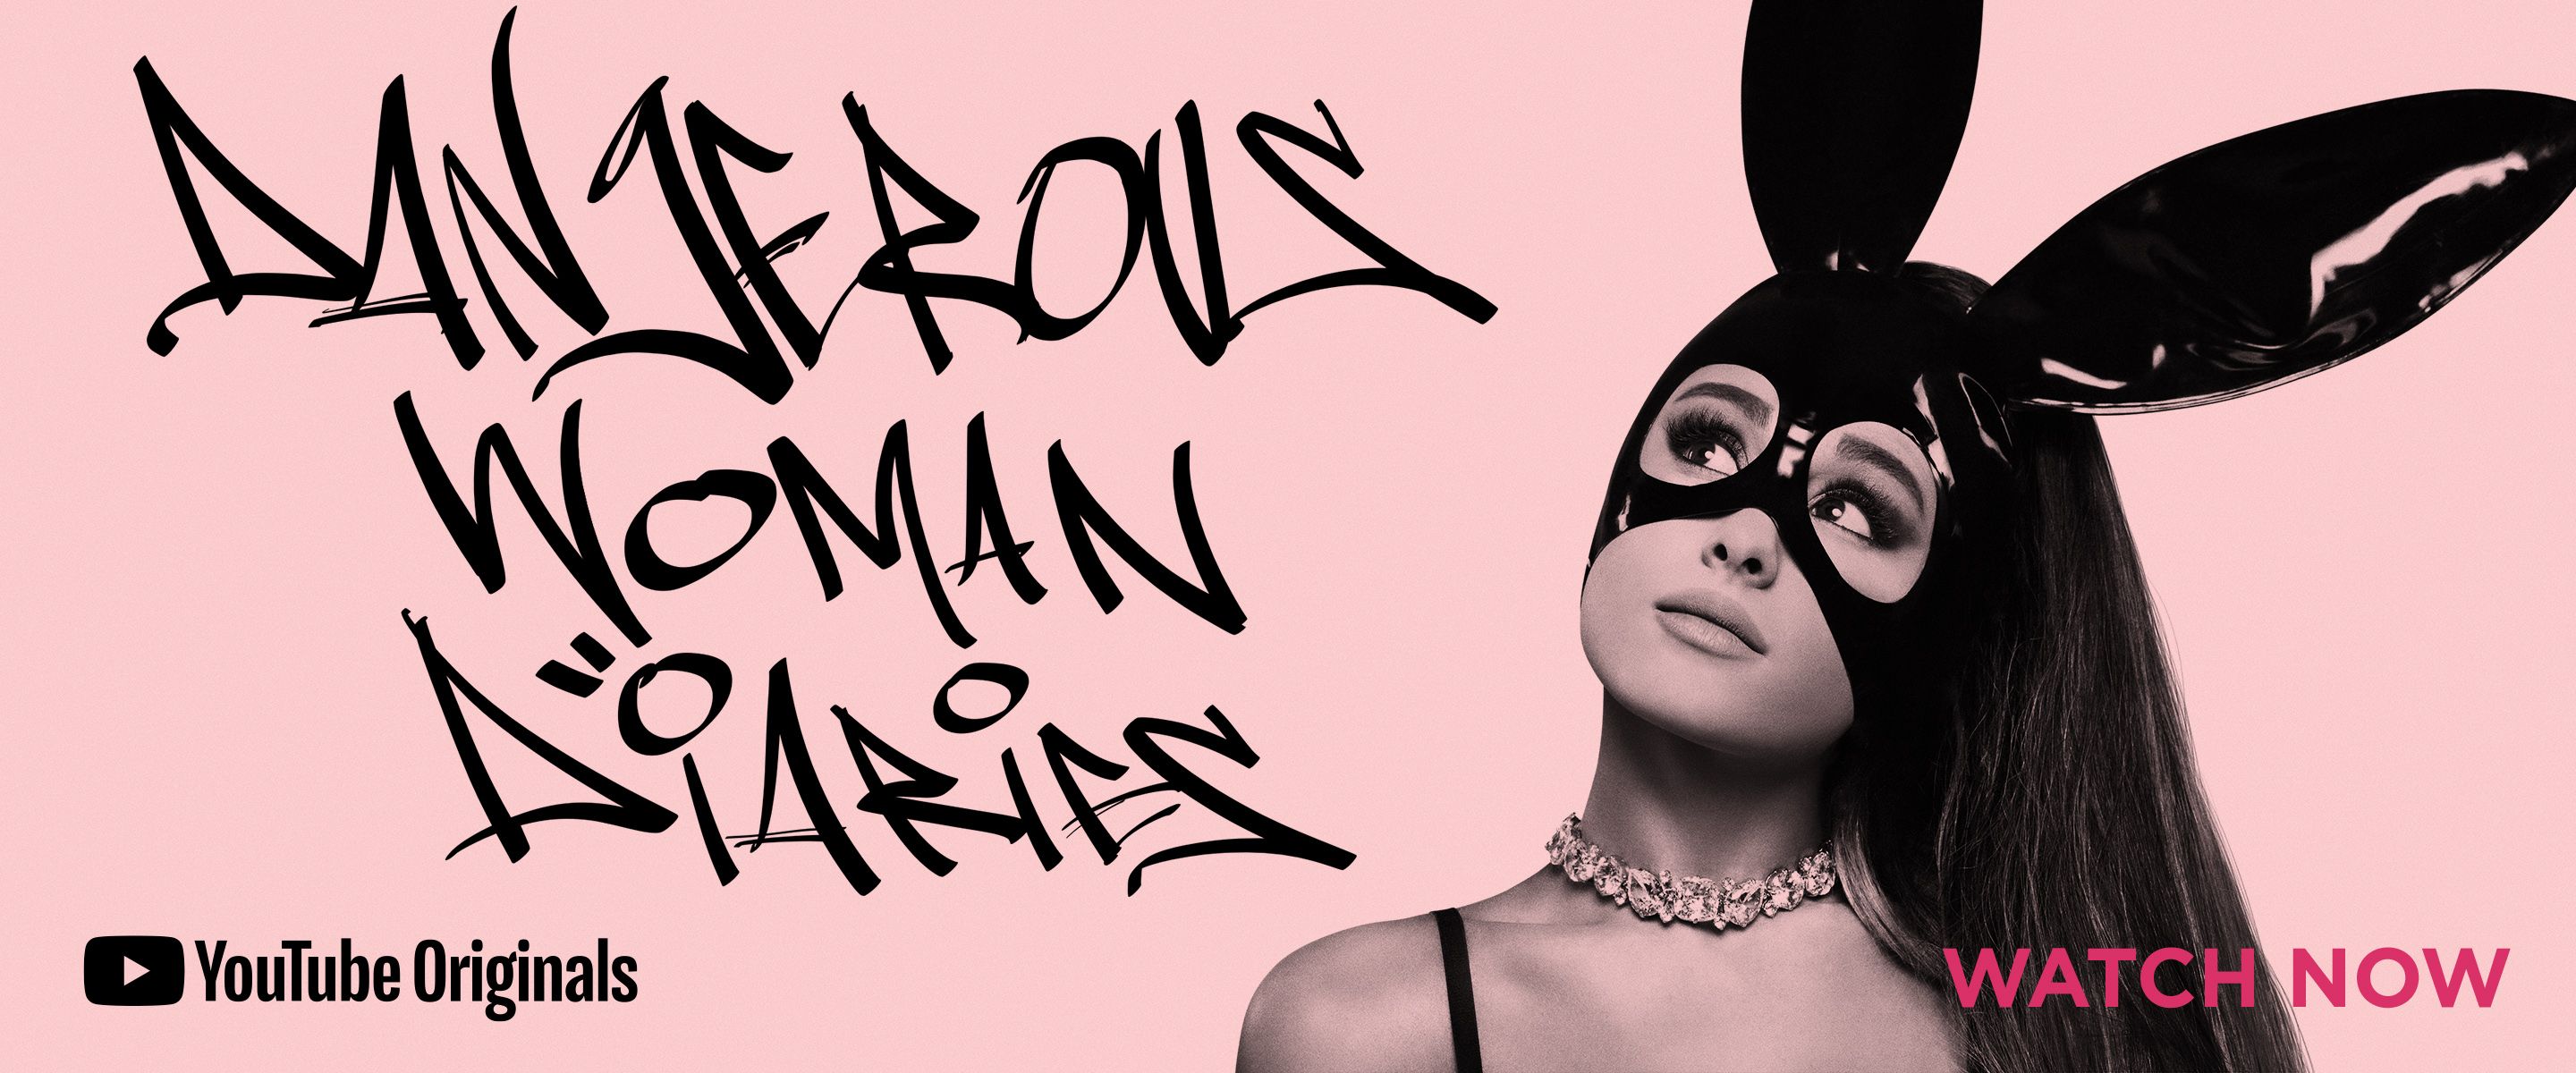 Ariana Grande documentary - Dangerous Woman docuseries released on YouTube